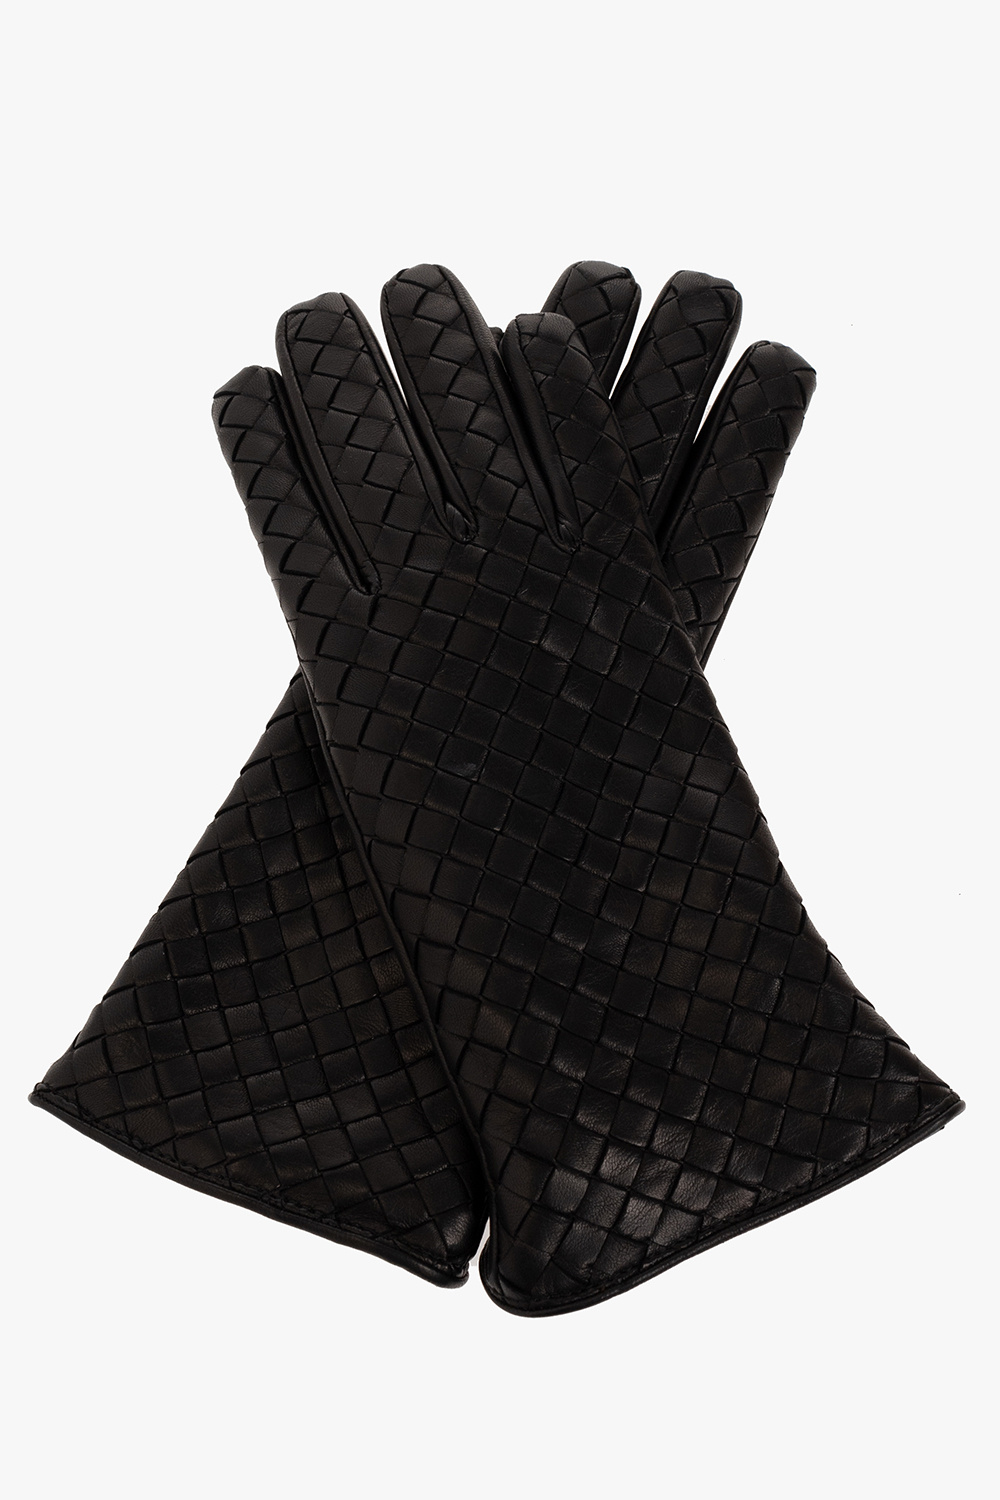 bottega Case Veneta Leather gloves